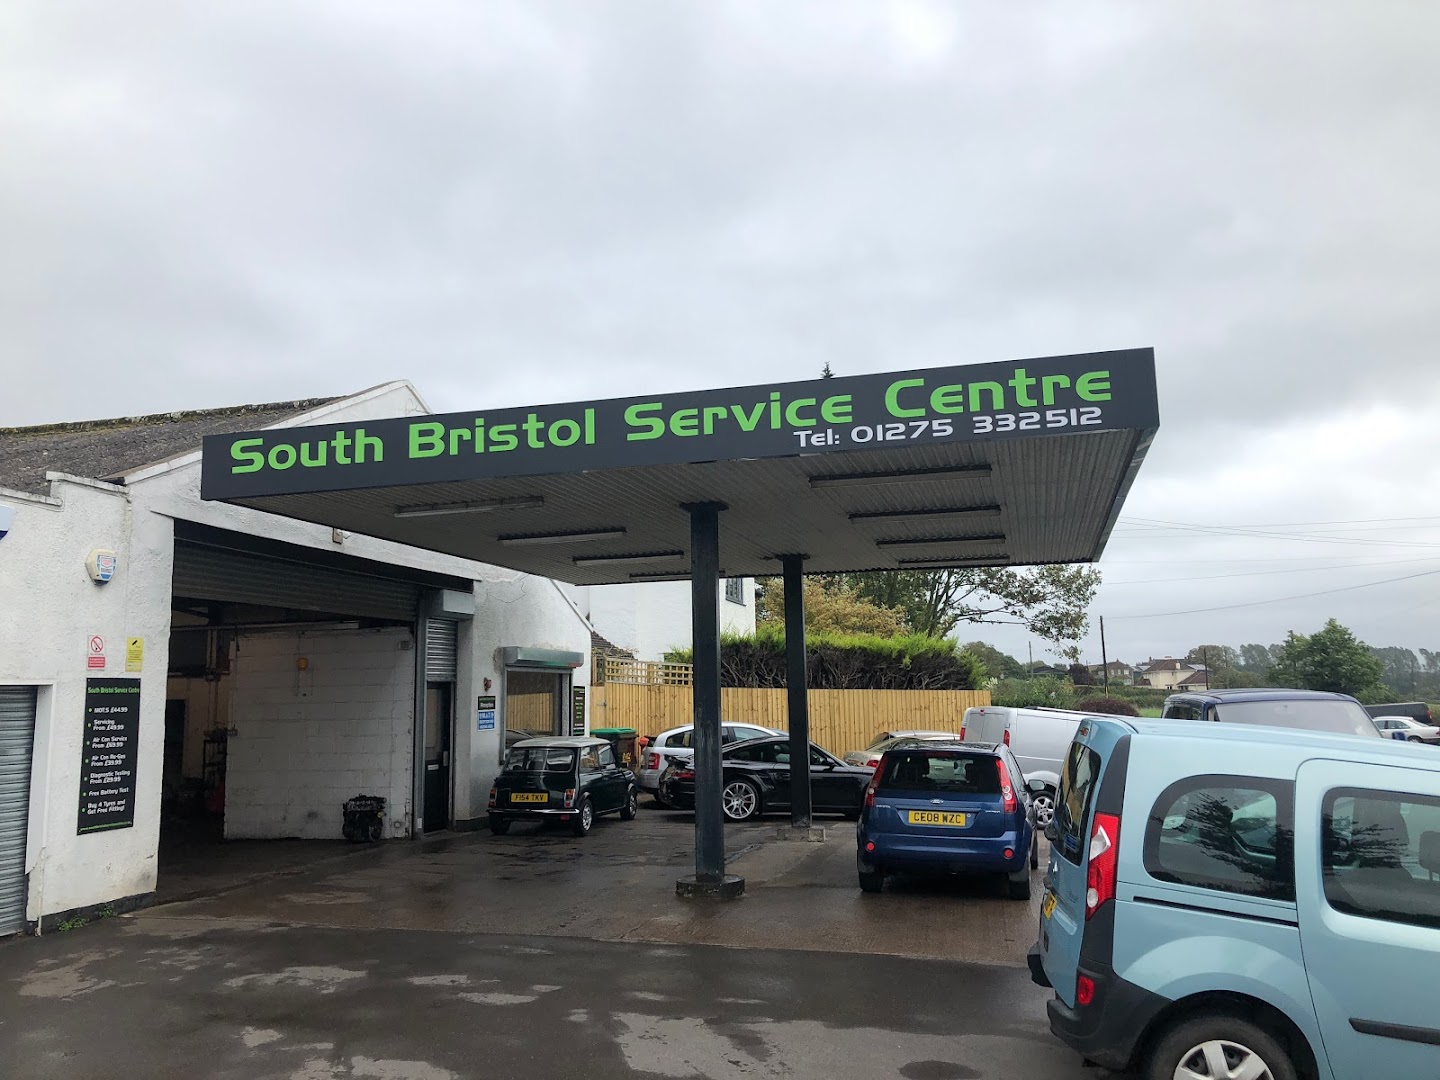 South Bristol Service Centre